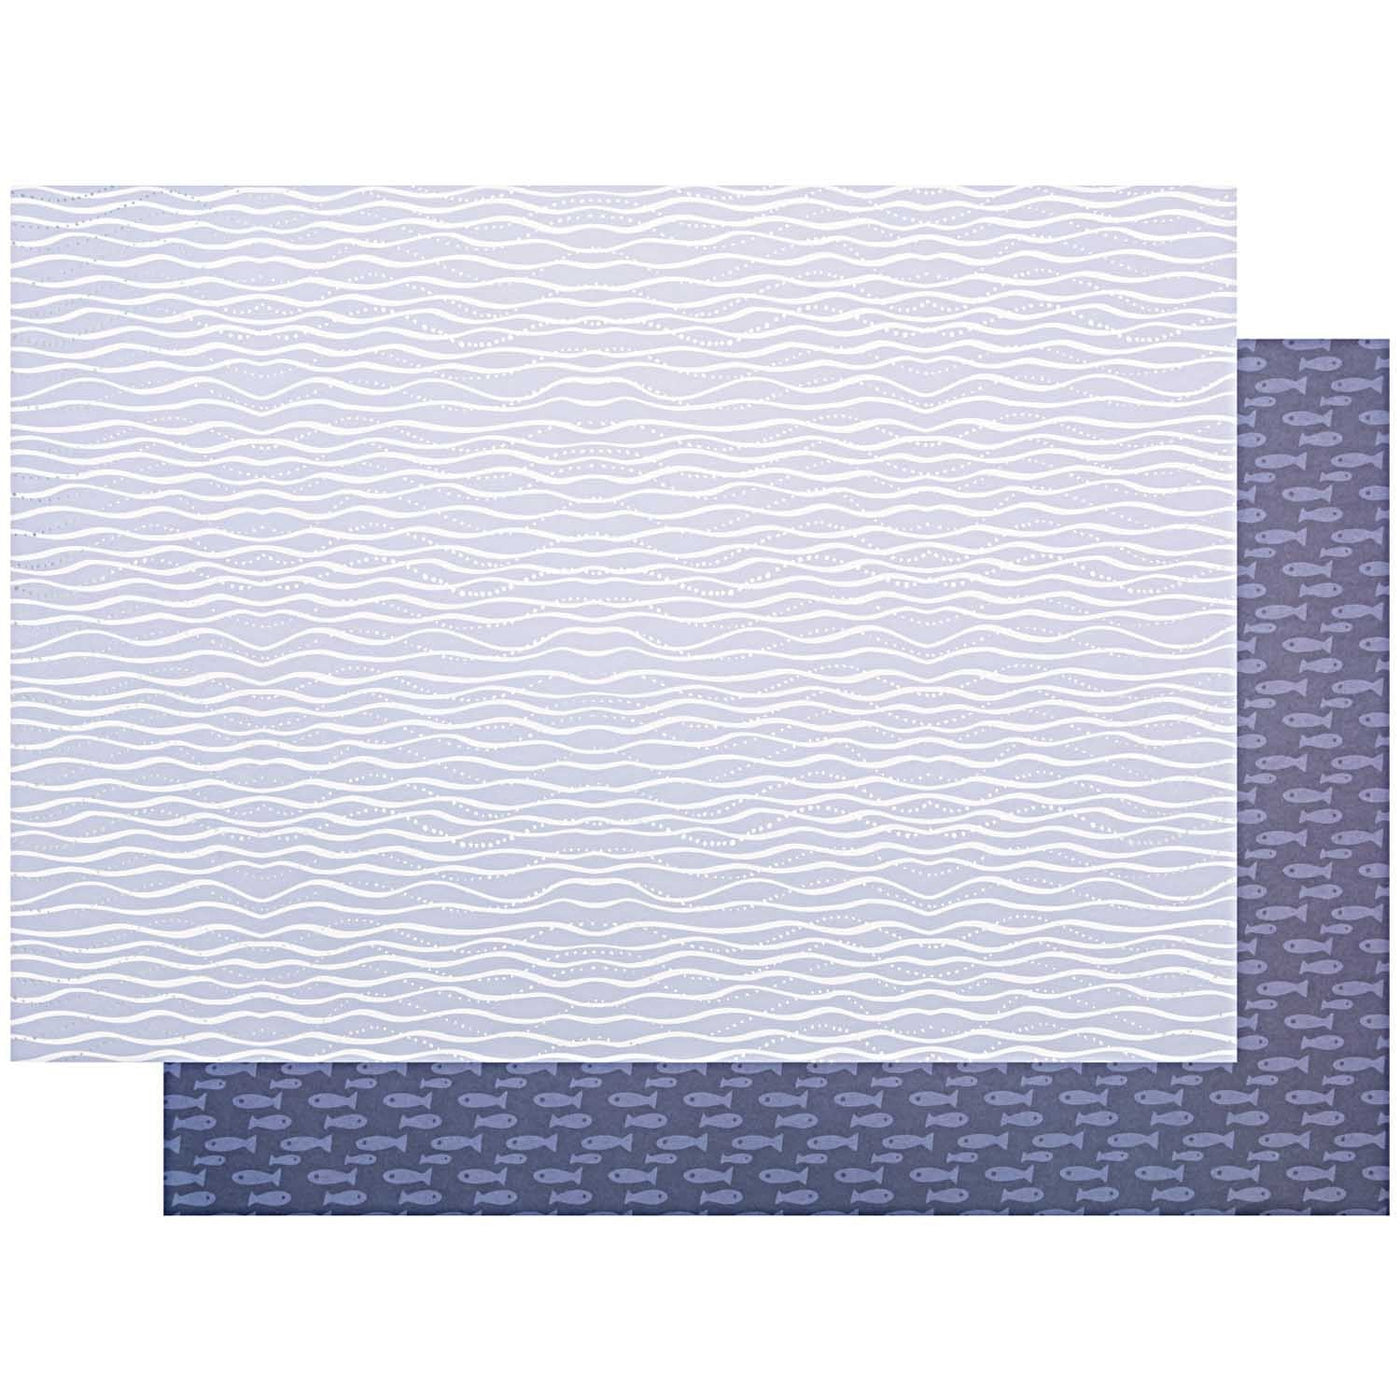 Cardboard Sheet - Blue Waves - Staff Only